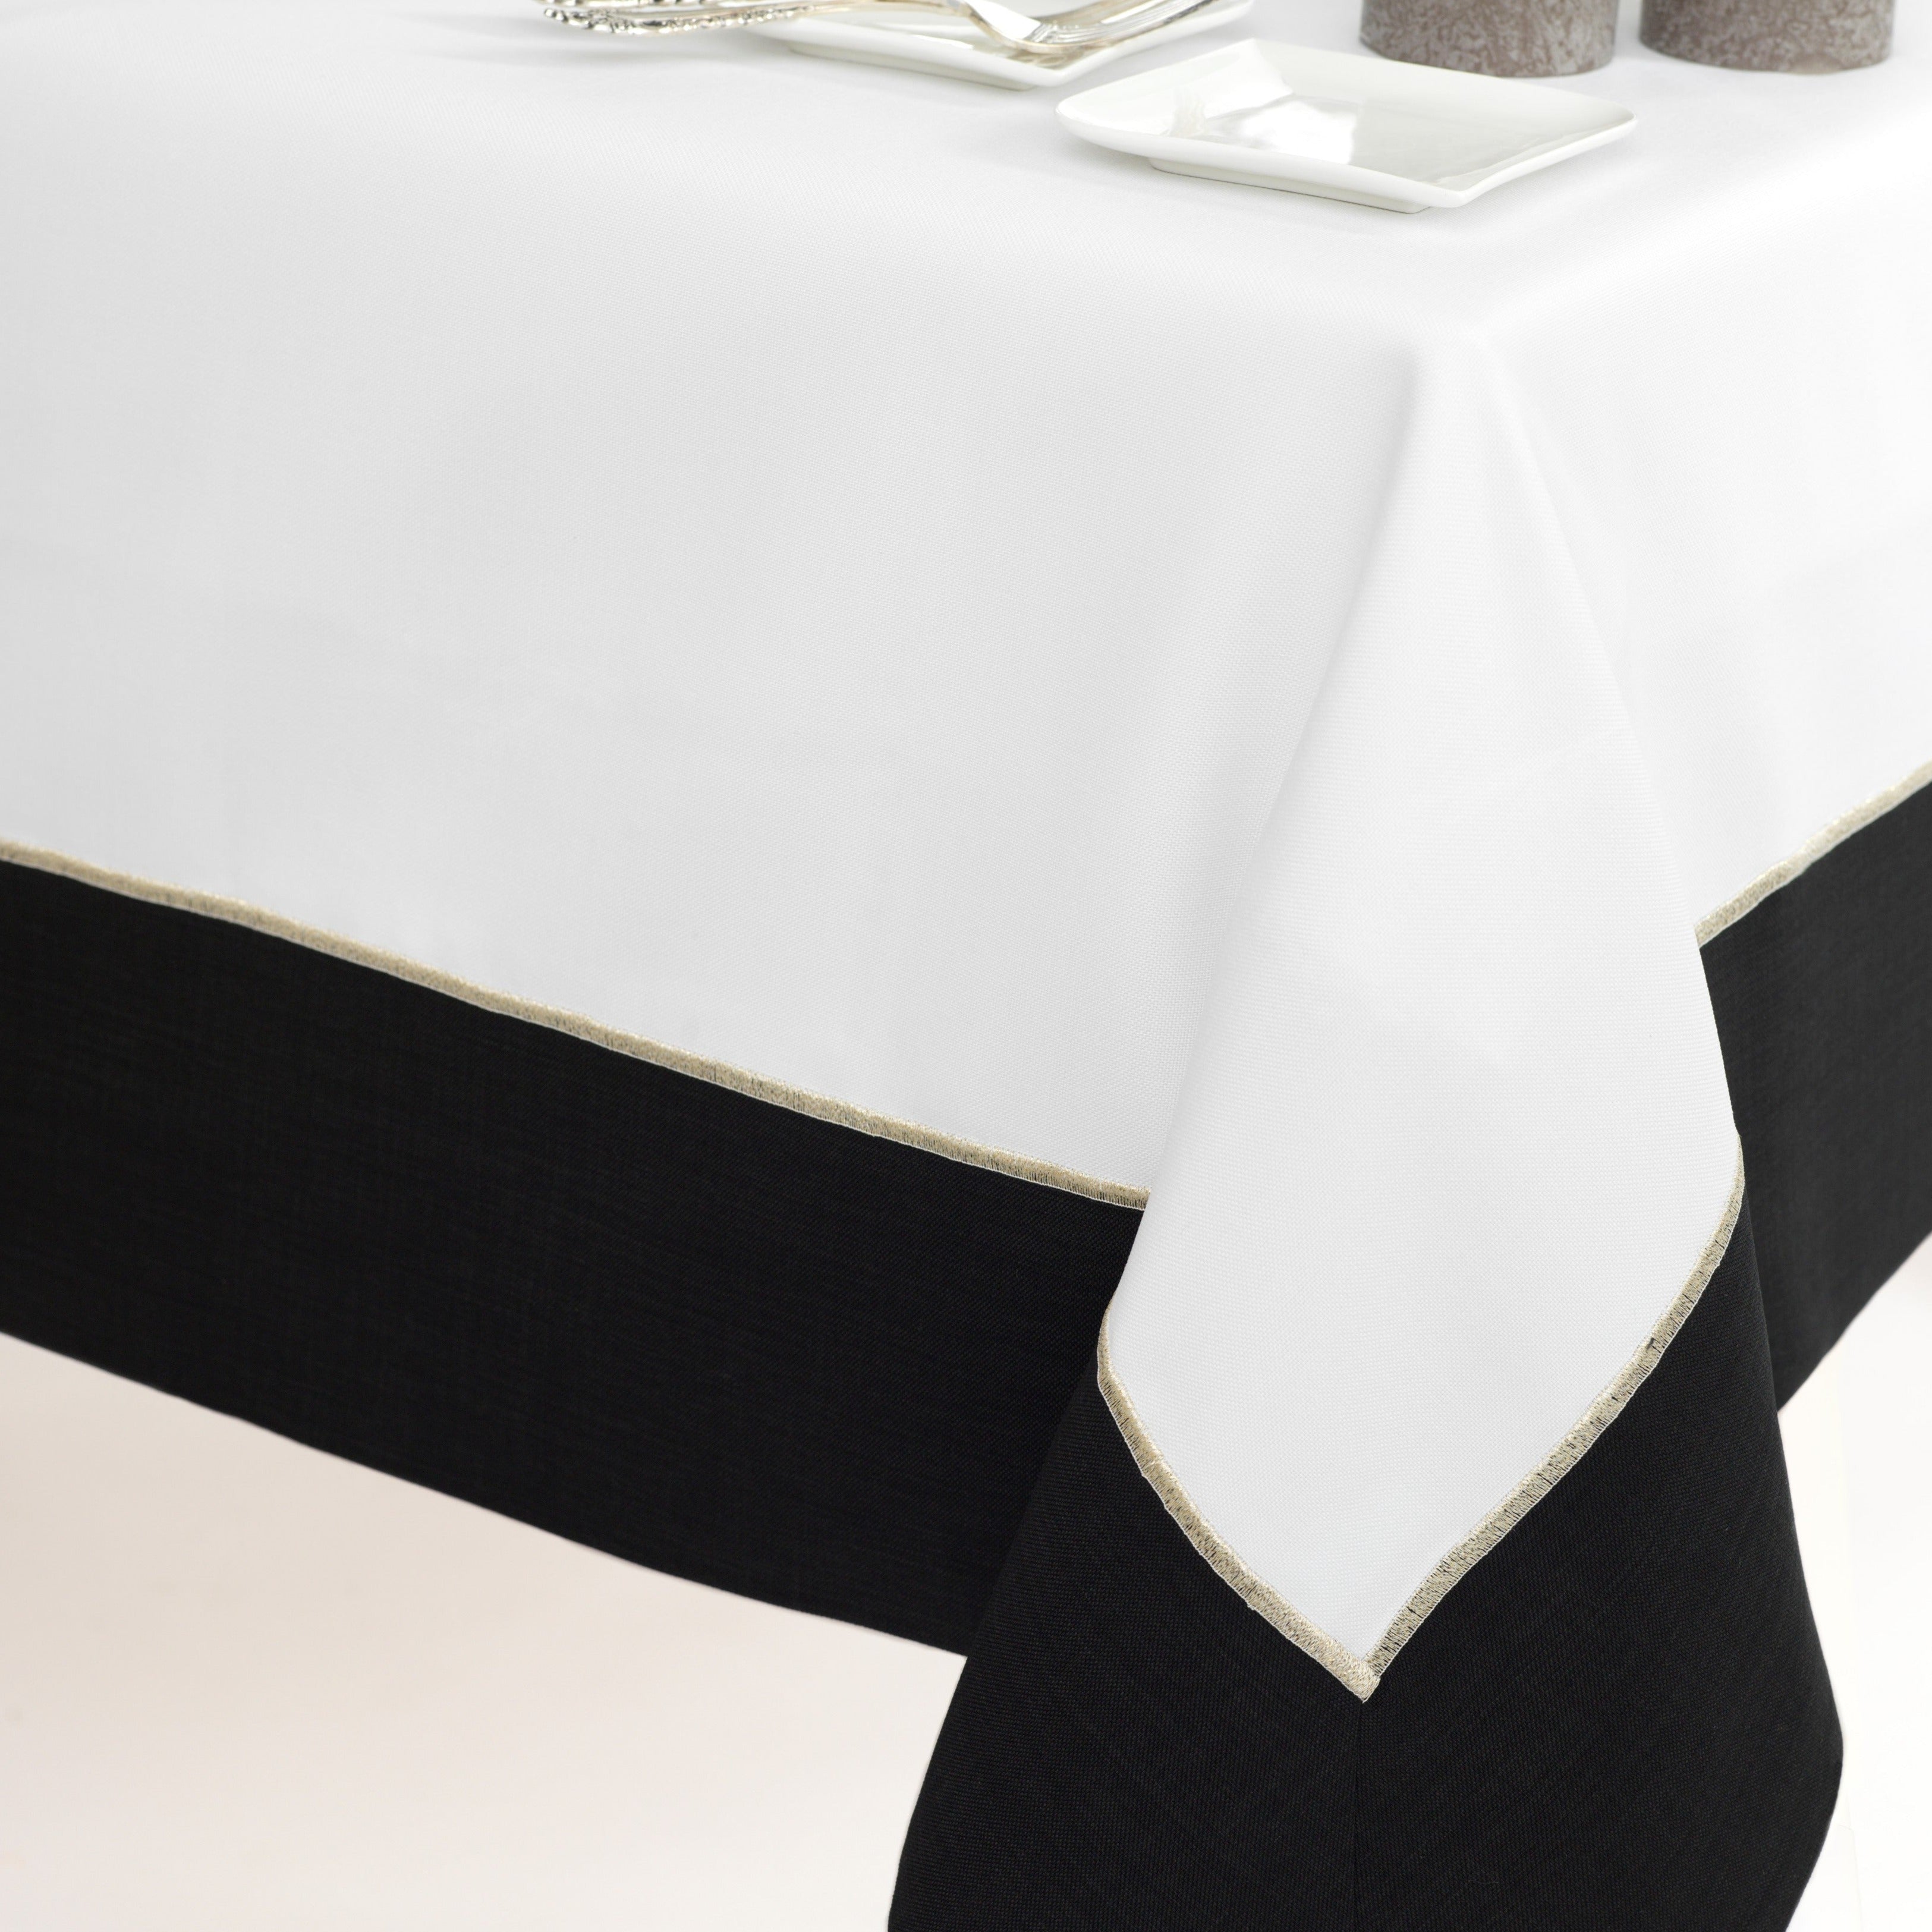 Loft Metallic Black Tablecloth